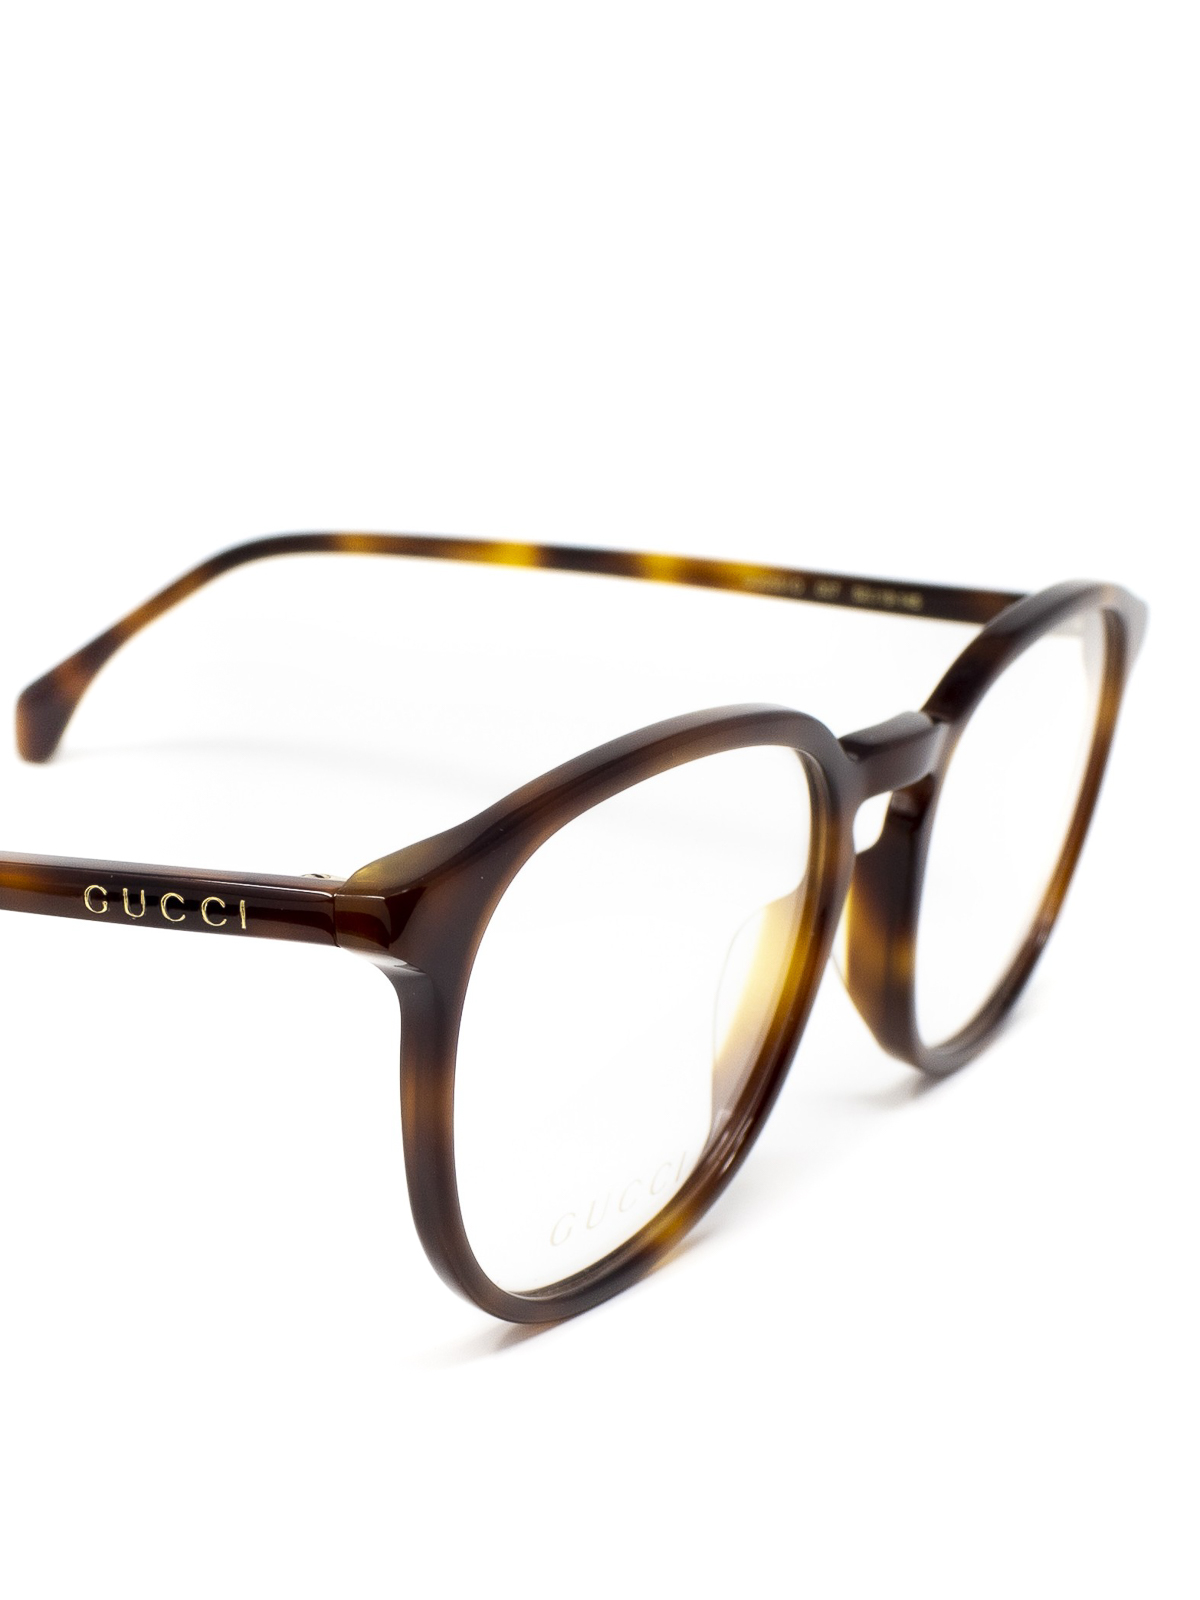 Glasses Gucci Tortoise Acetate Eyeglasses Gg0551o003